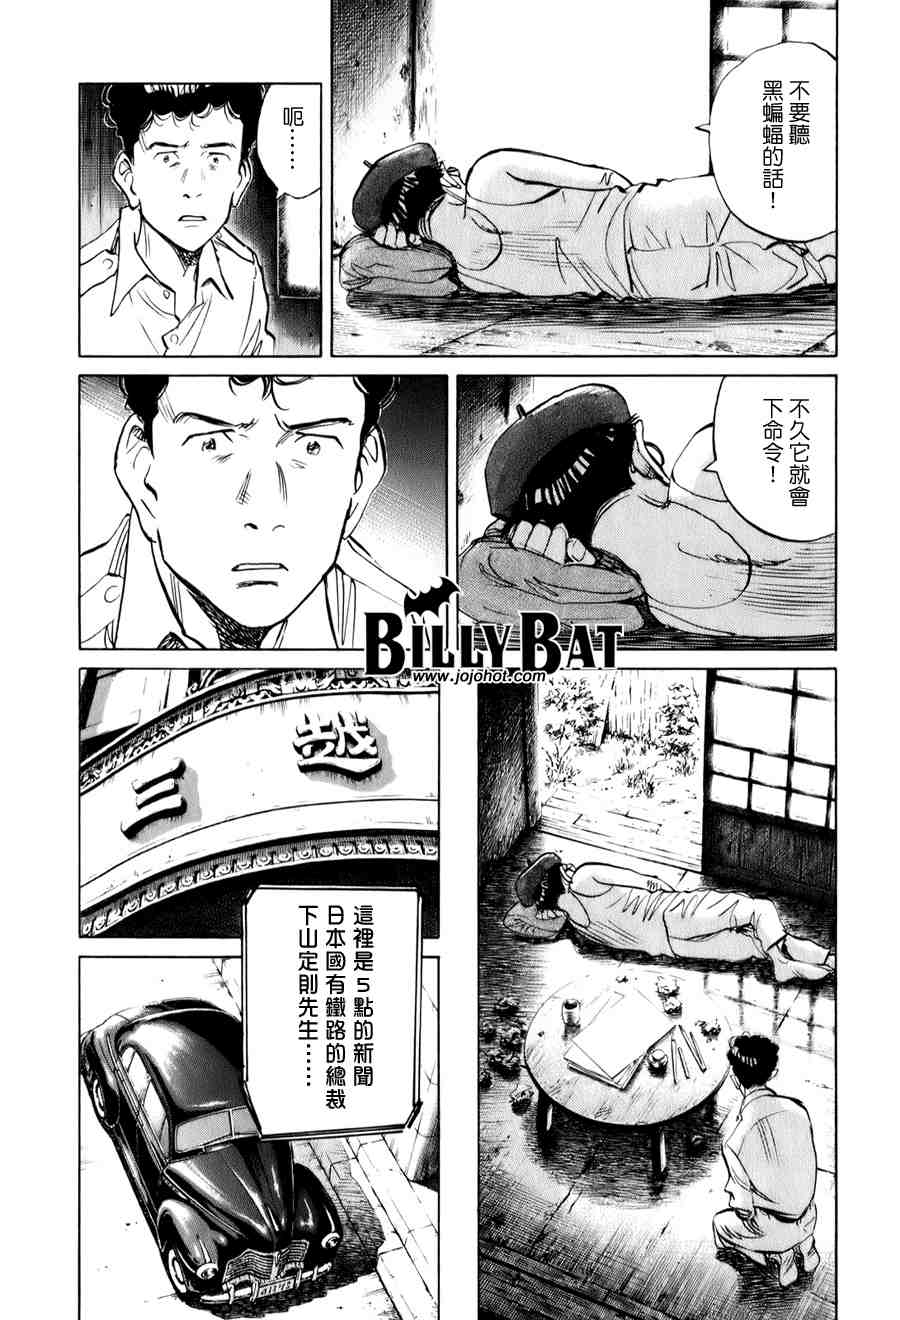 Billy_Bat - 第1卷(3/4) - 6